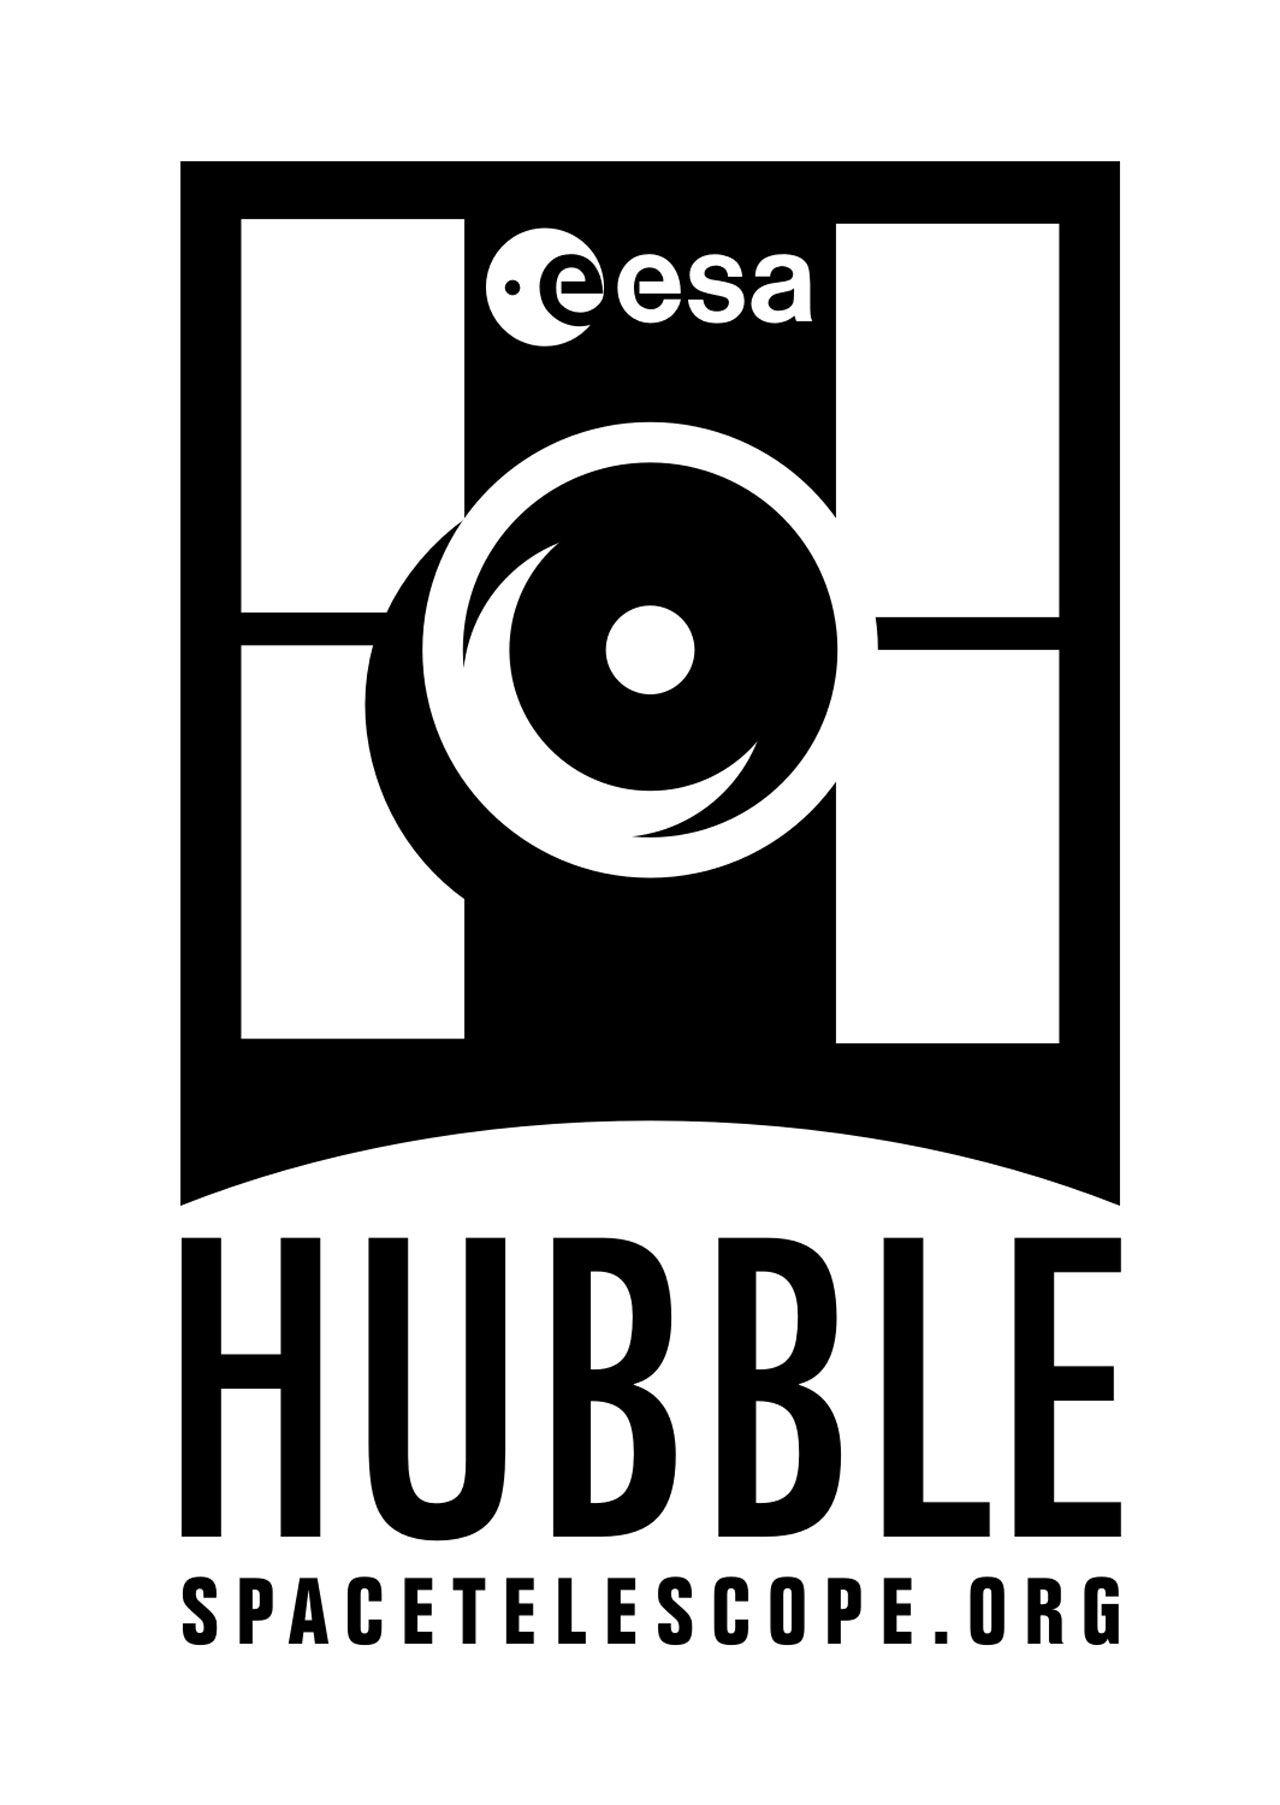 Esa Logo - Hubble European Space Agency Information Centre logo. ESA